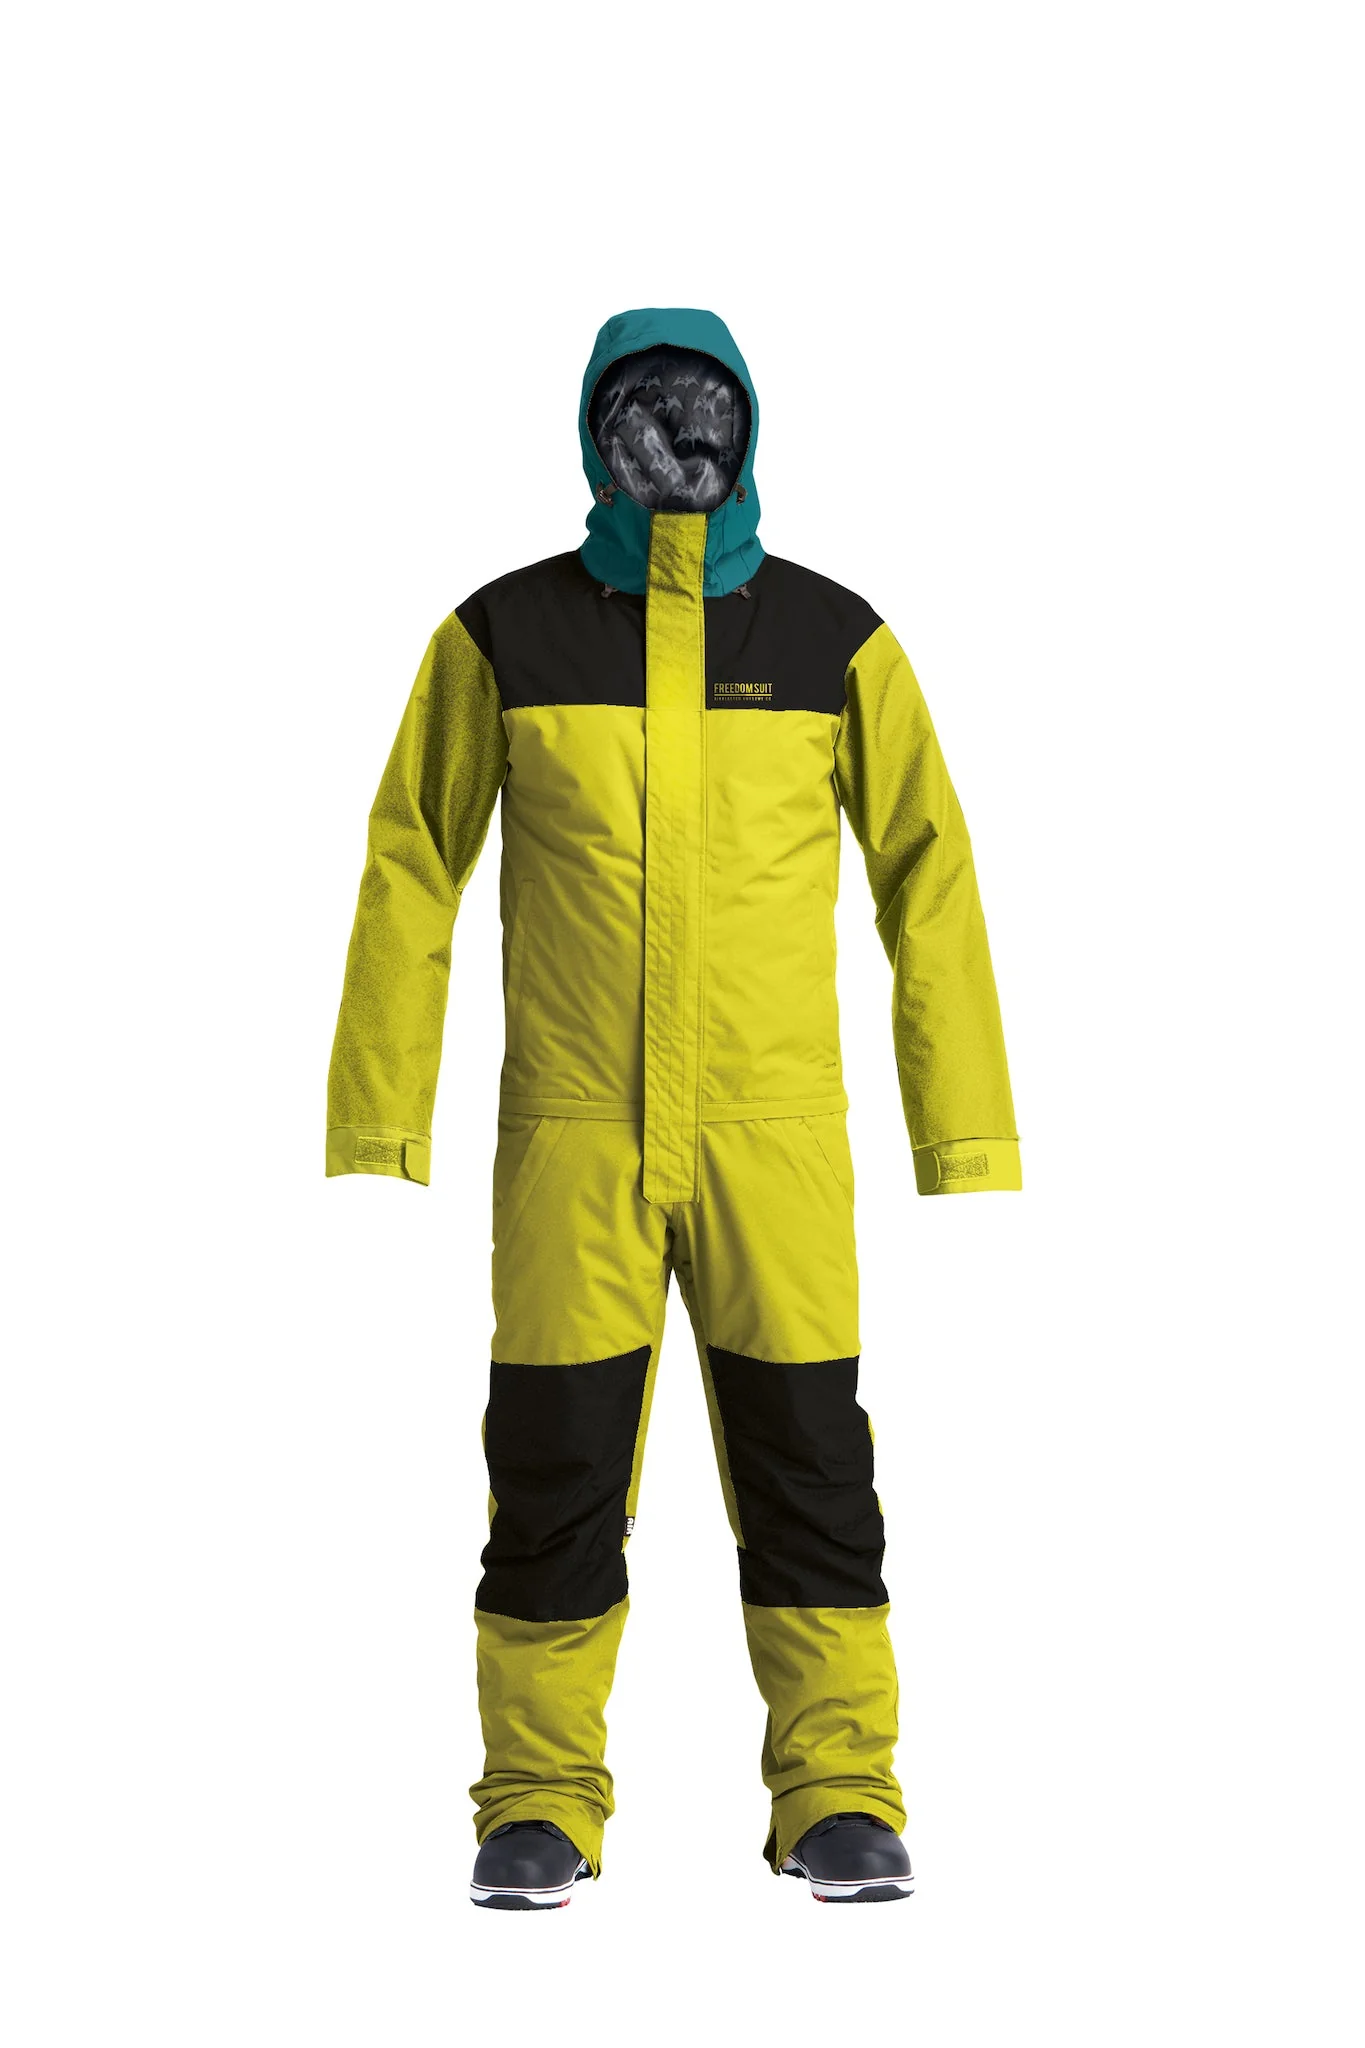 Airblaster Freedom Suit onepiece safety